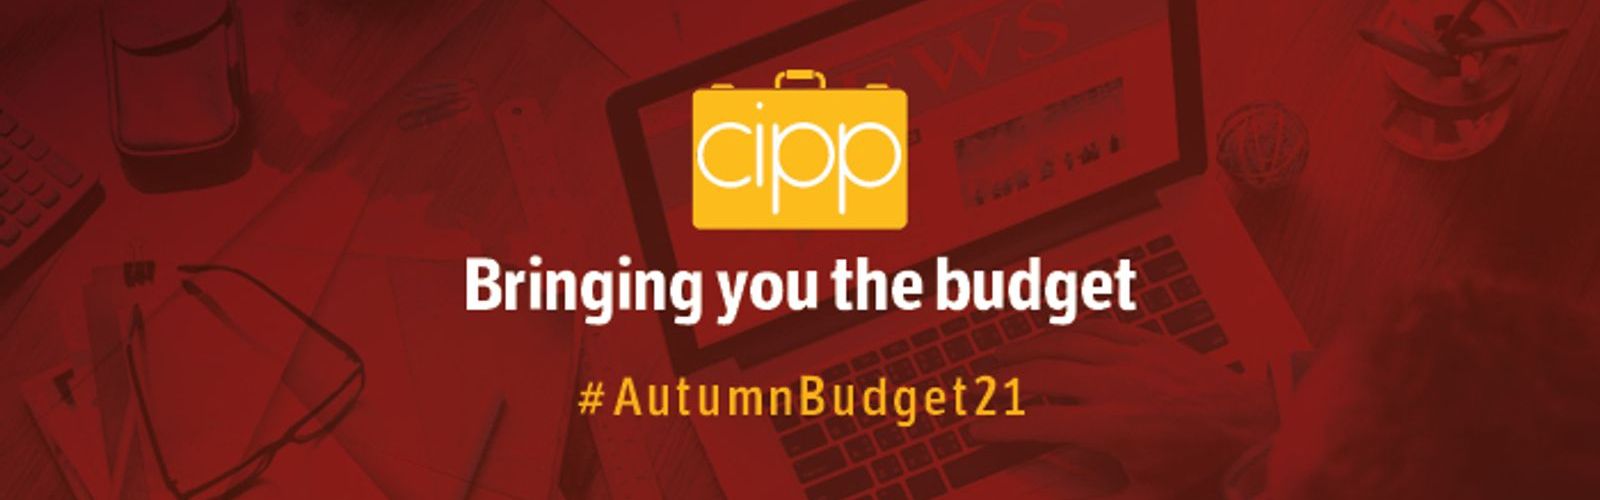 21.10.25 Autumn 2021 Budget takeover NOL header image3.jpg